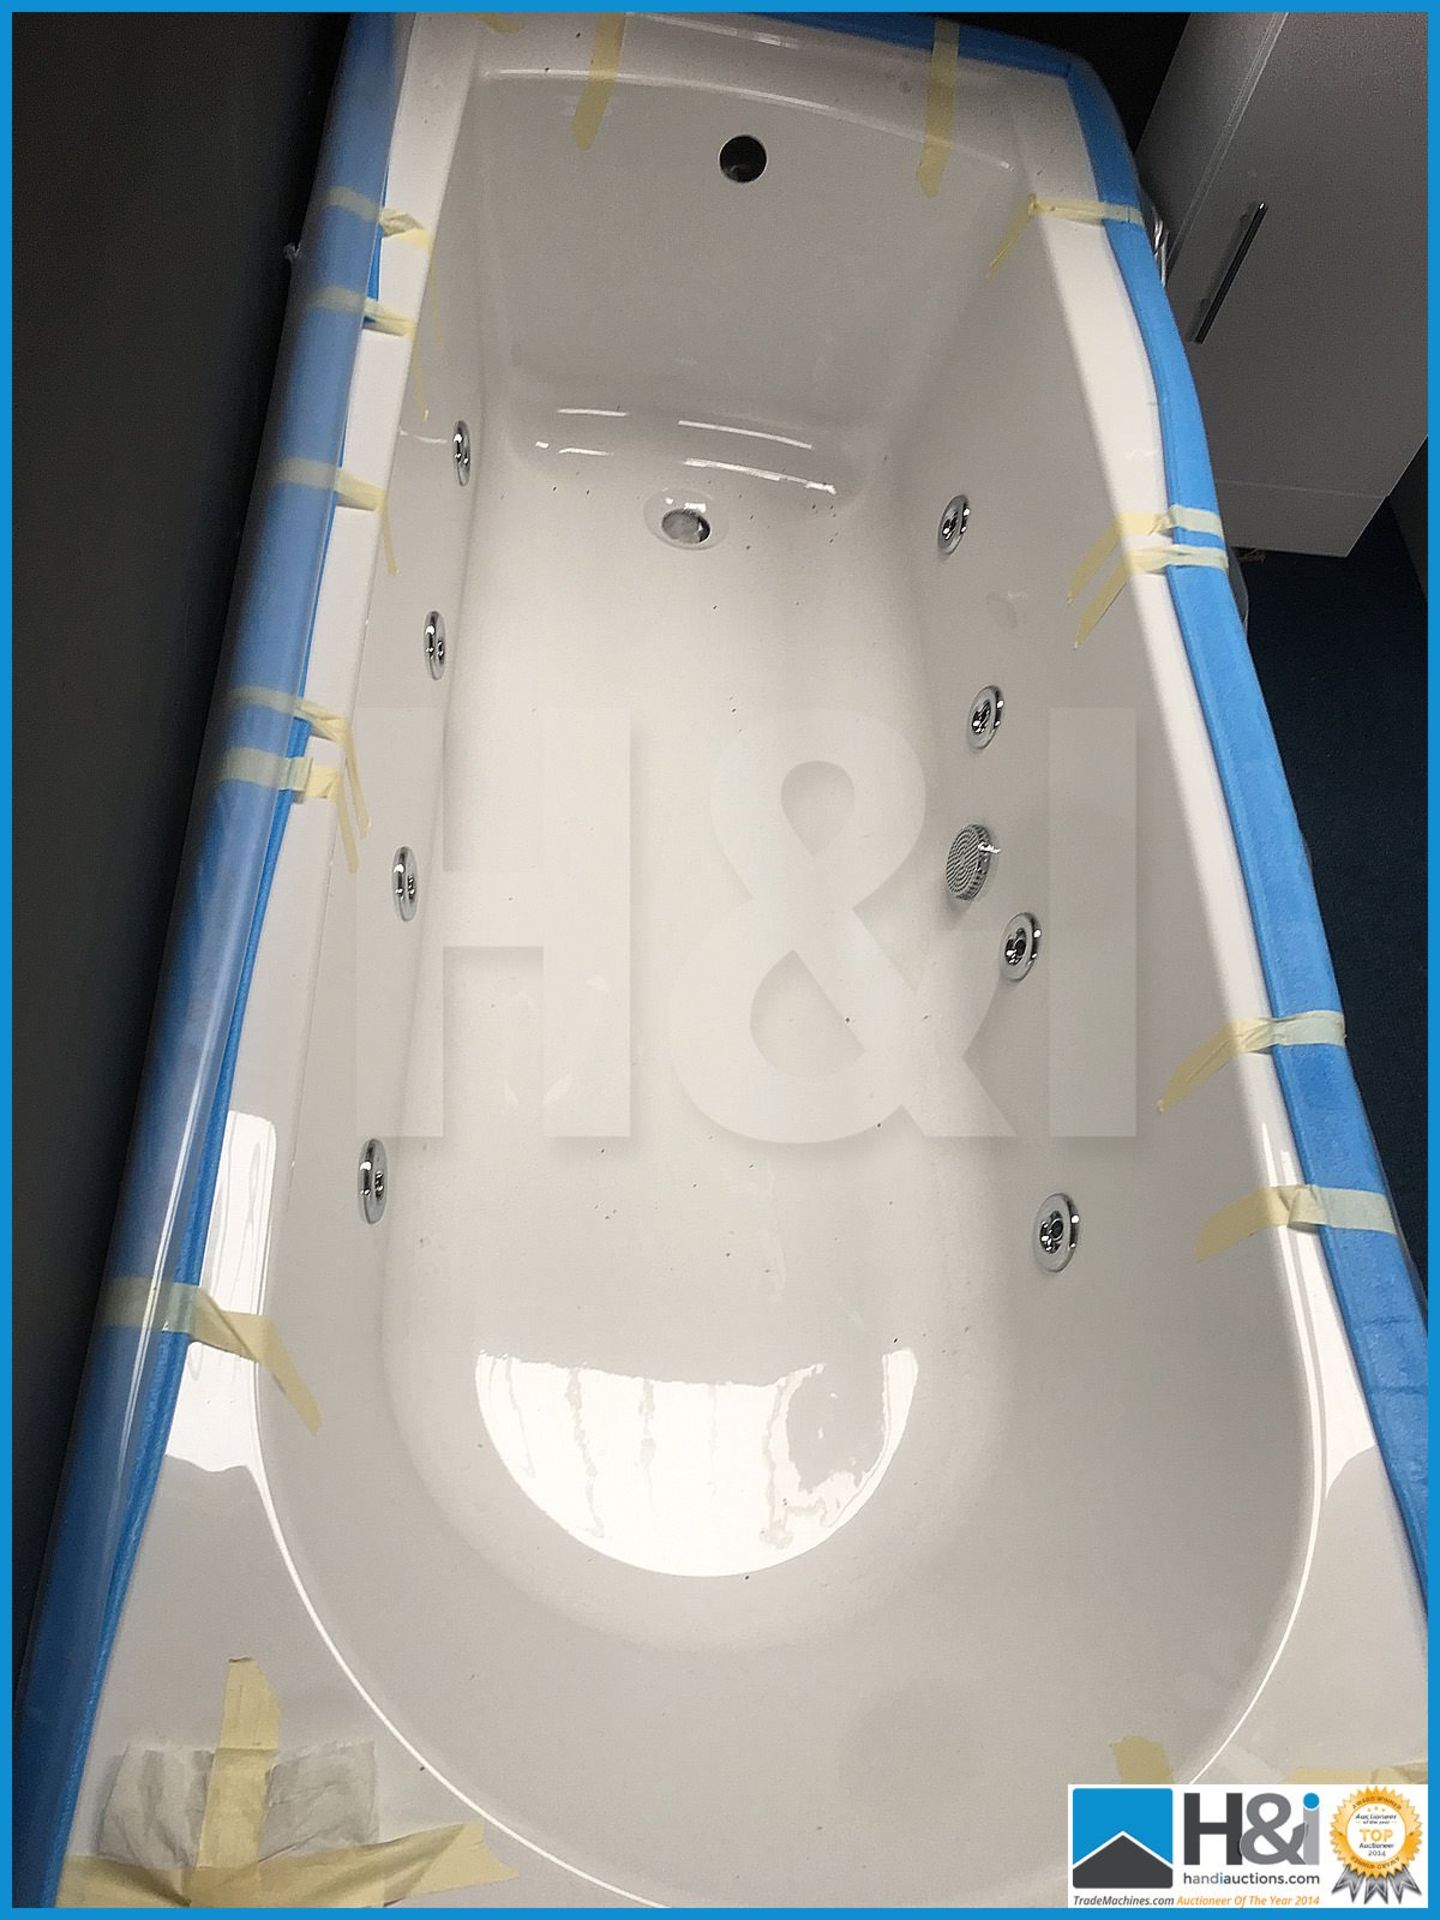 Designer Koller whirlpool bathtub 1700x700. 8 jet whirlpool system. Unused and boxed. Suggested manu